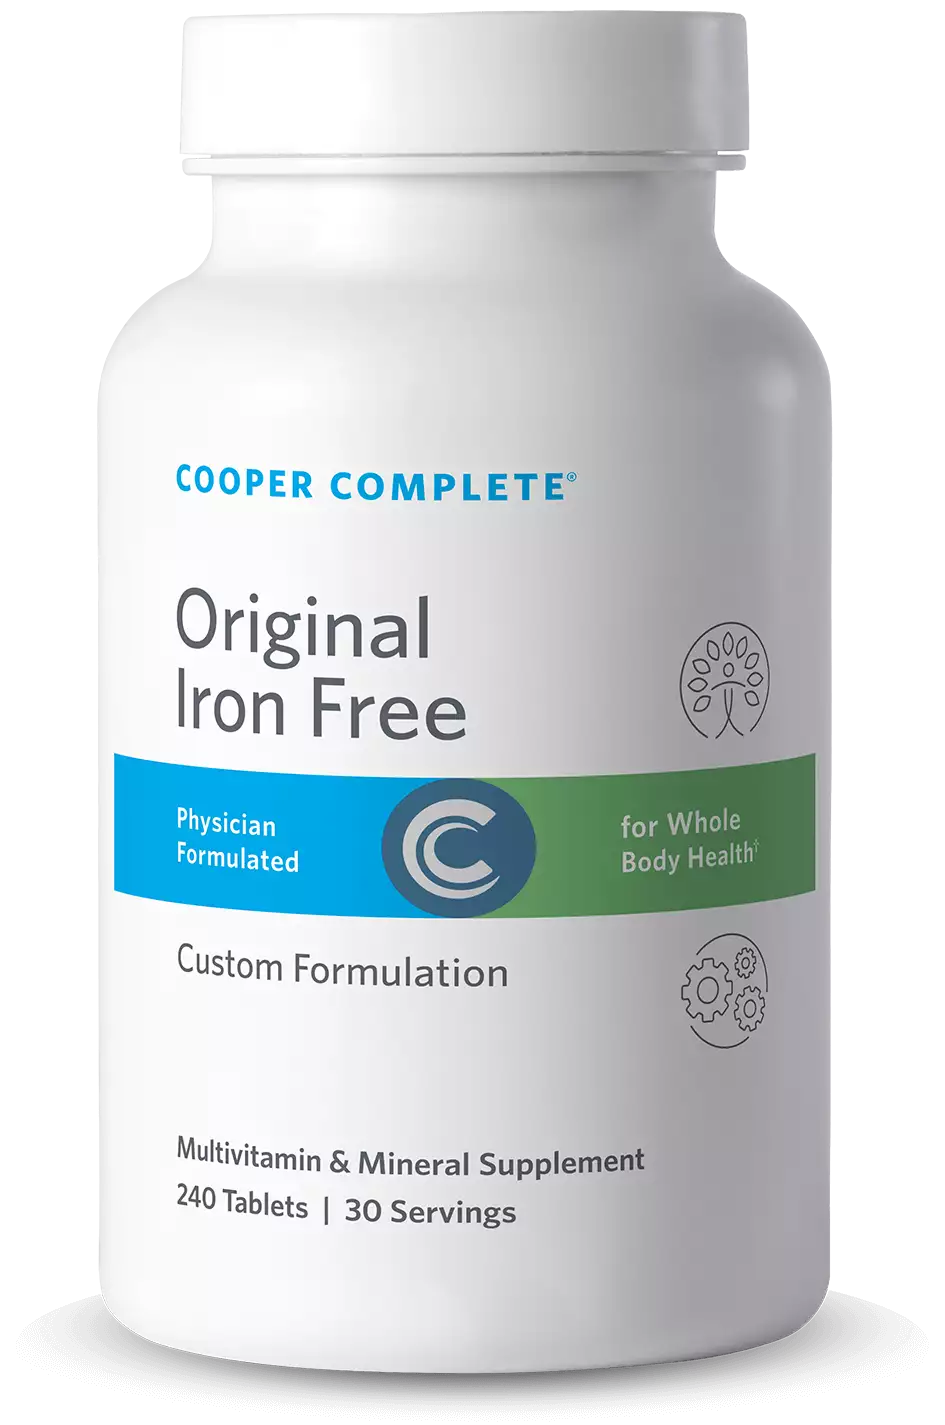 Photo of Cooper Complete Original Comprehensive Multivitamin Iron Free Supplement bottle.